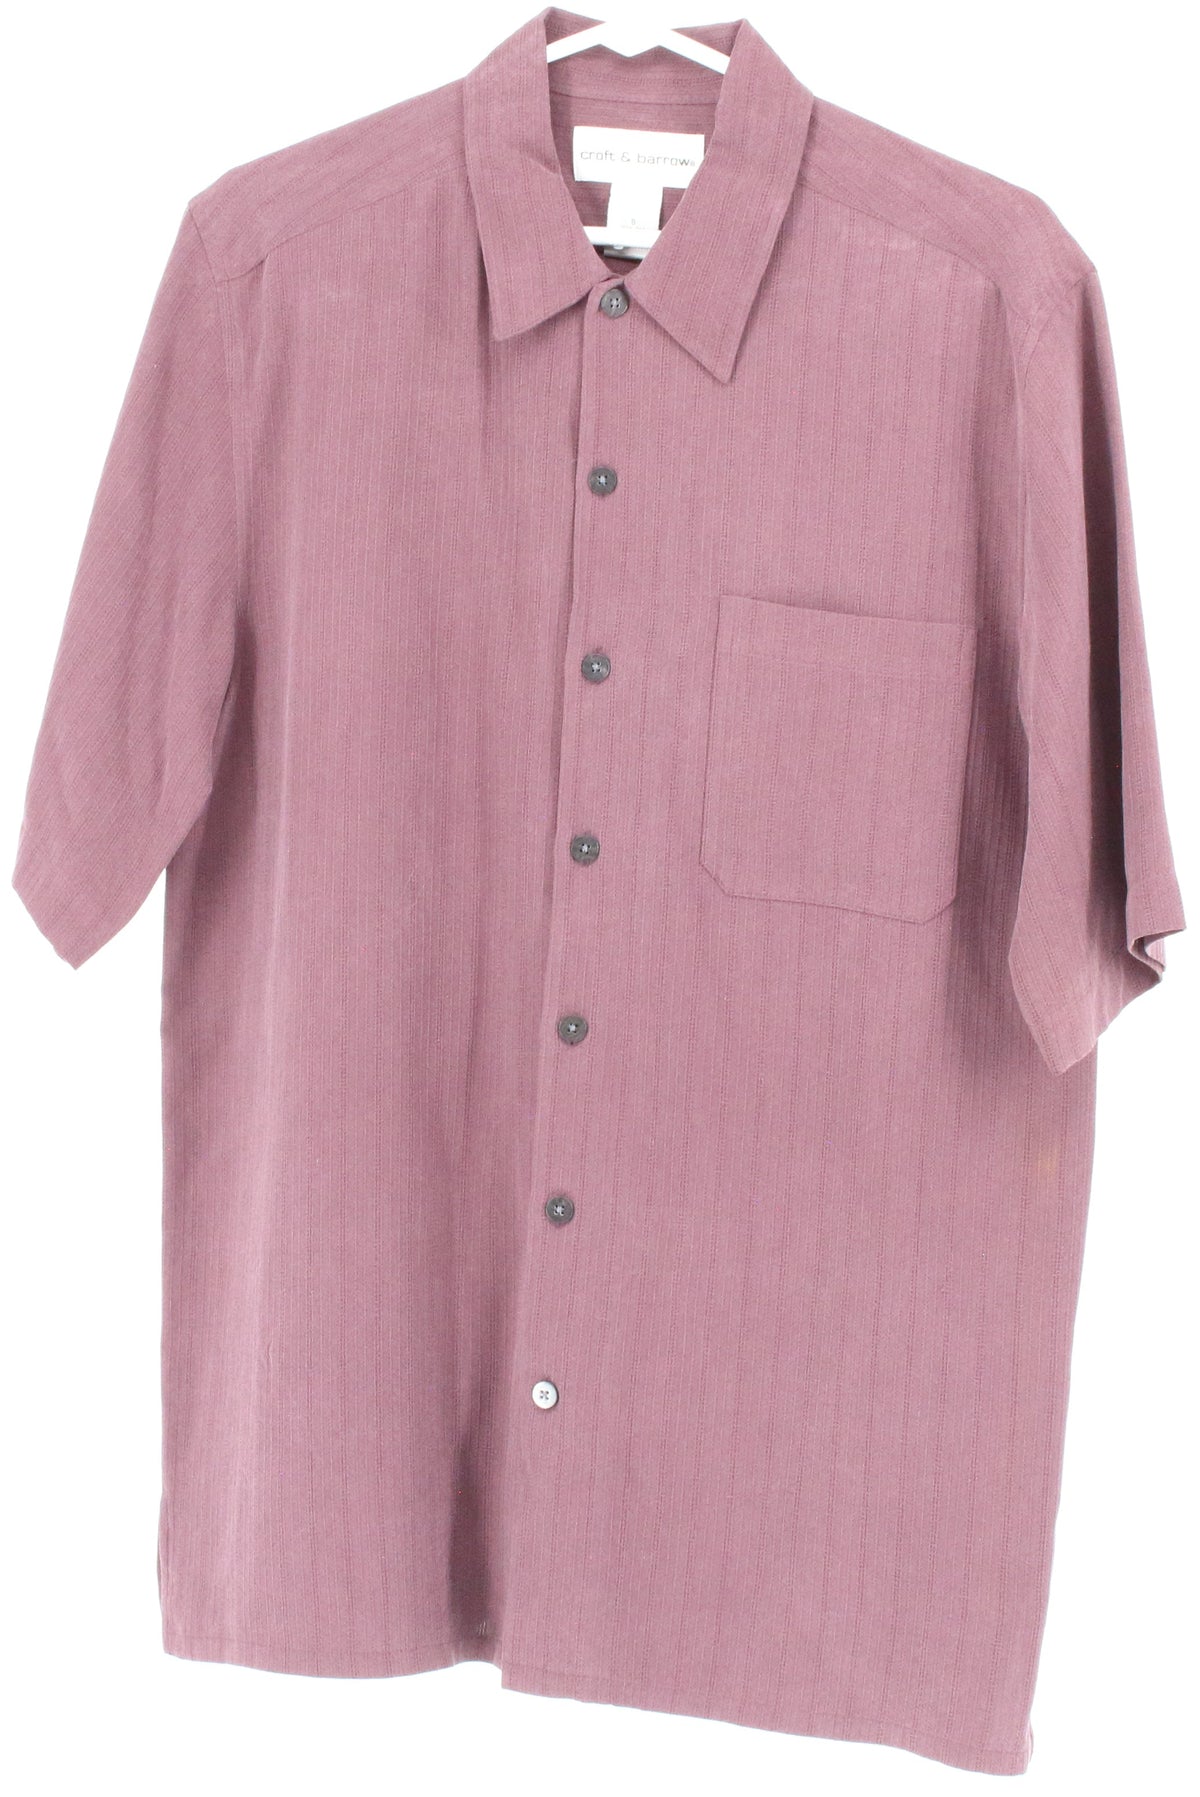 Croft & Barrow Dark Burgundy Button-Up Short Sleeve Shirt